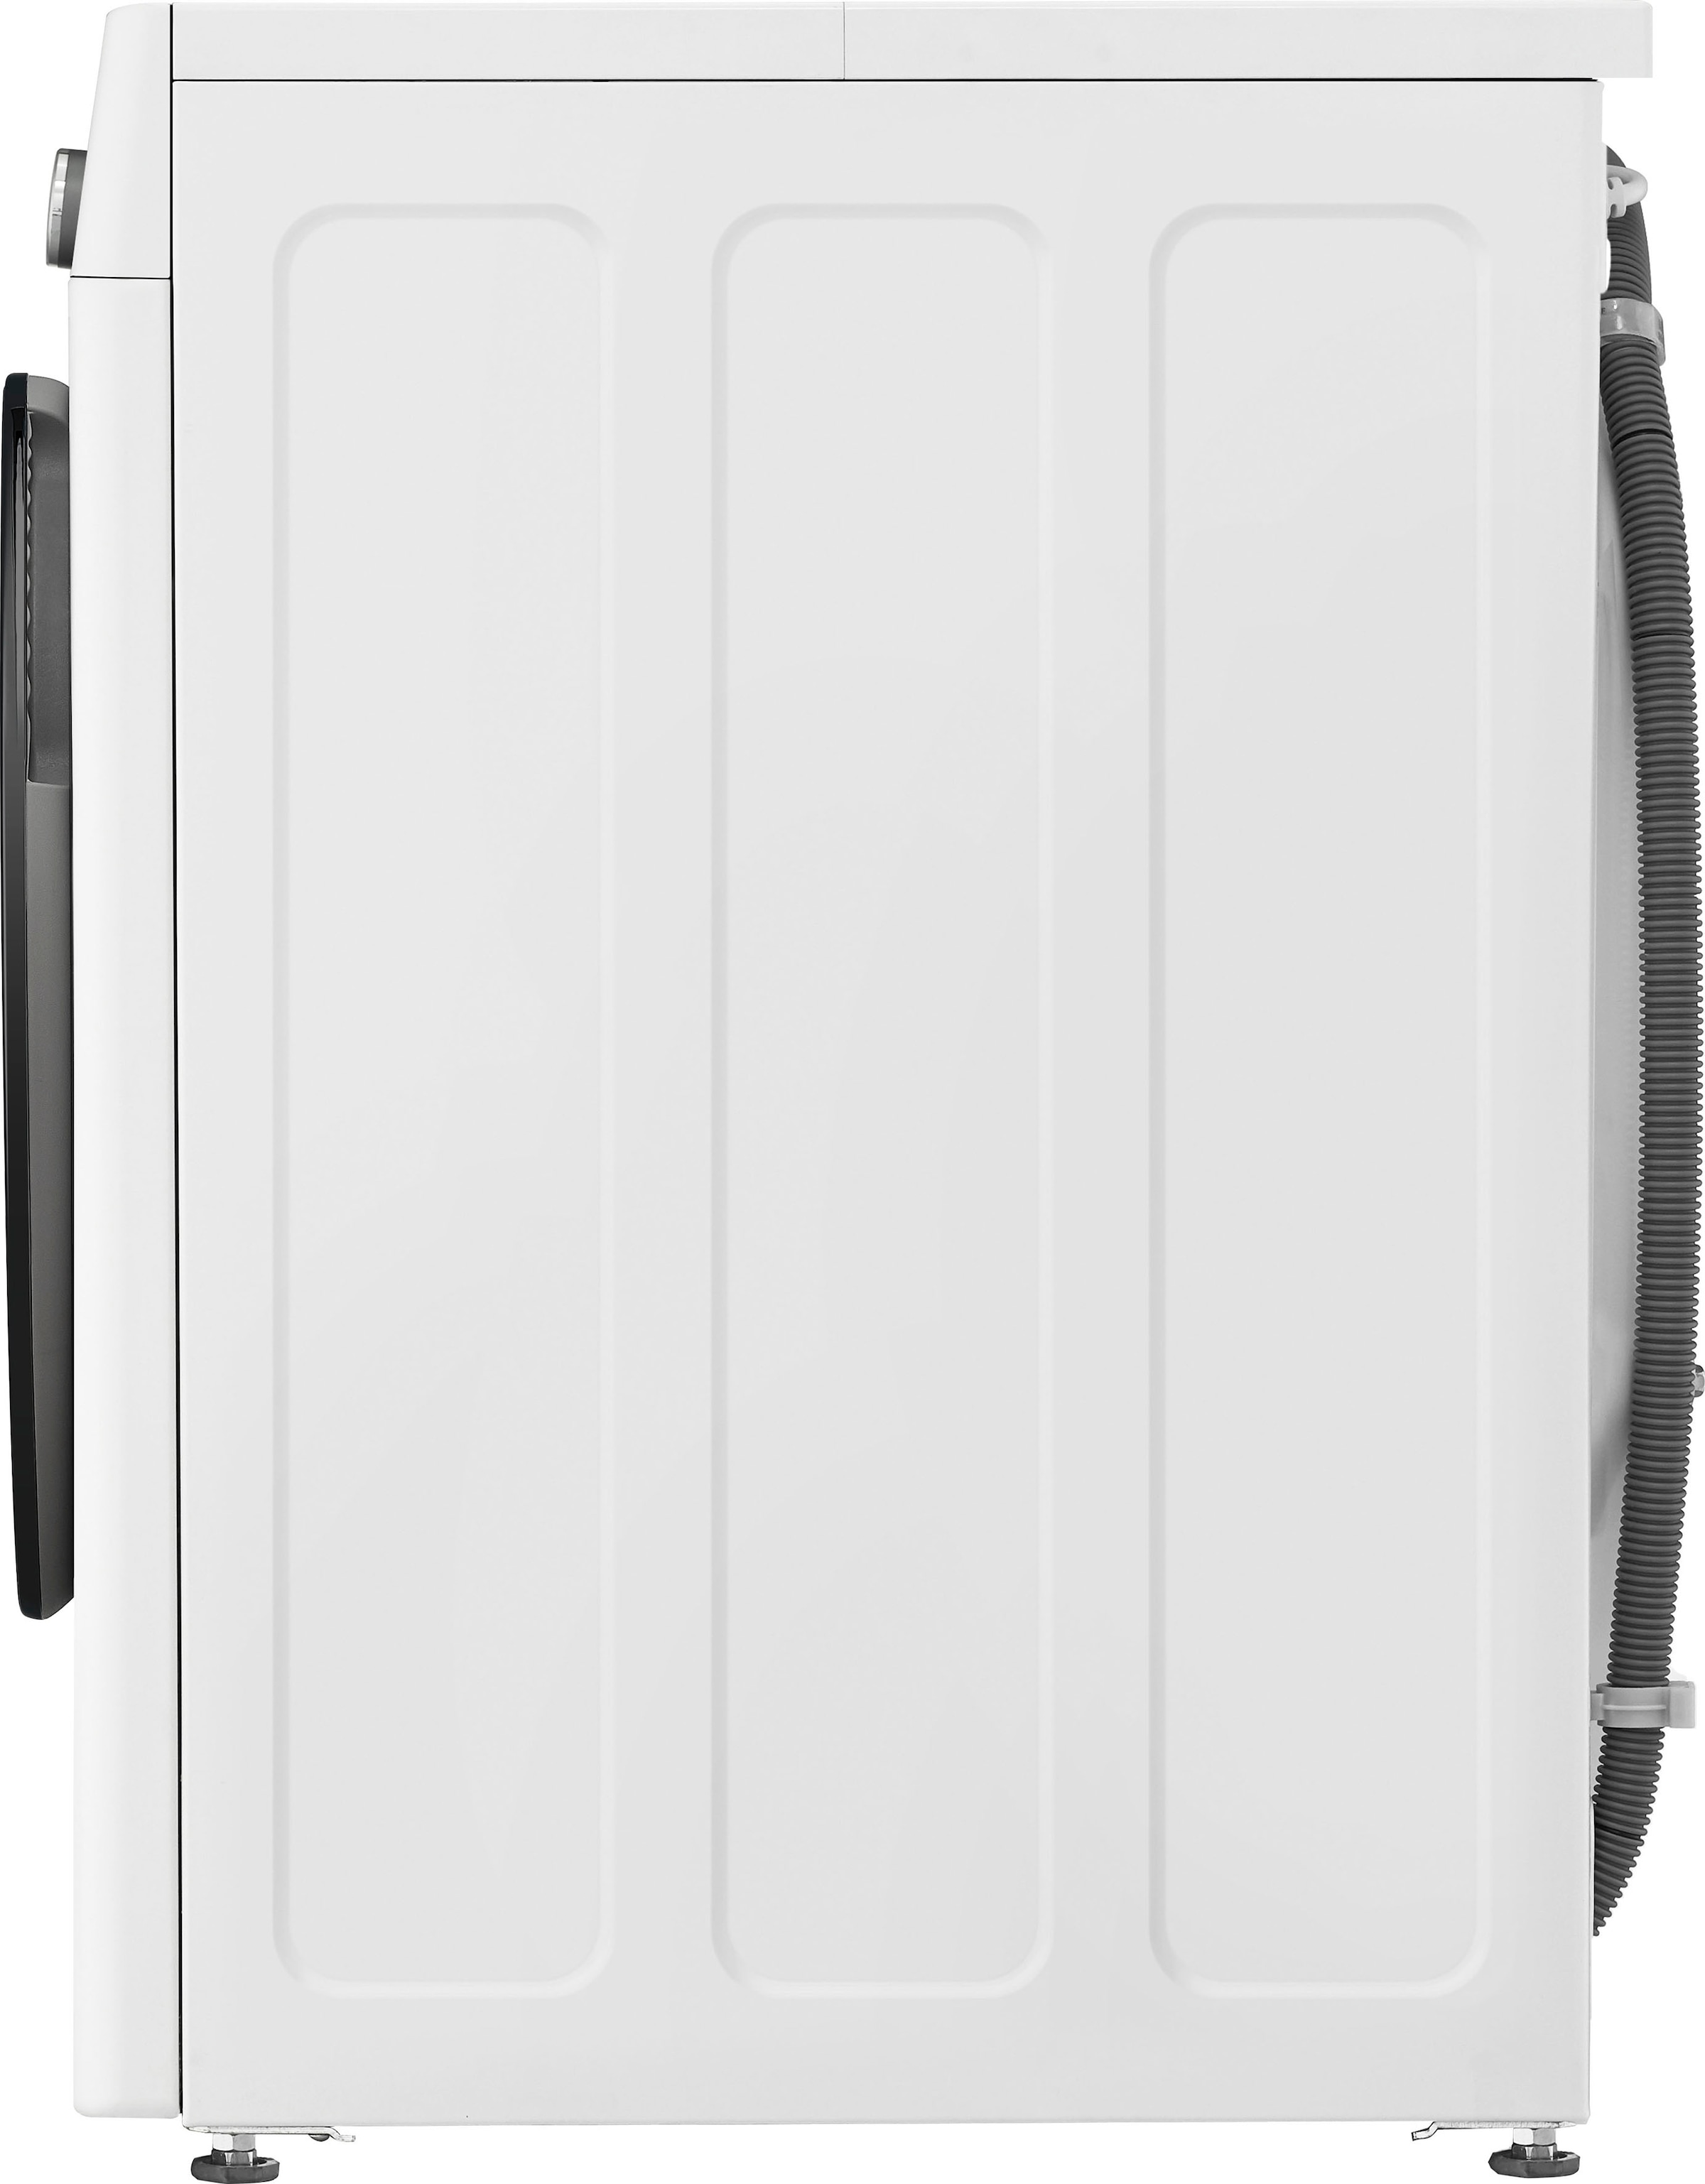 LG Waschmaschine »F4WR7031«, Serie 7, F4WR7031, 13 kg, 1400 U/min